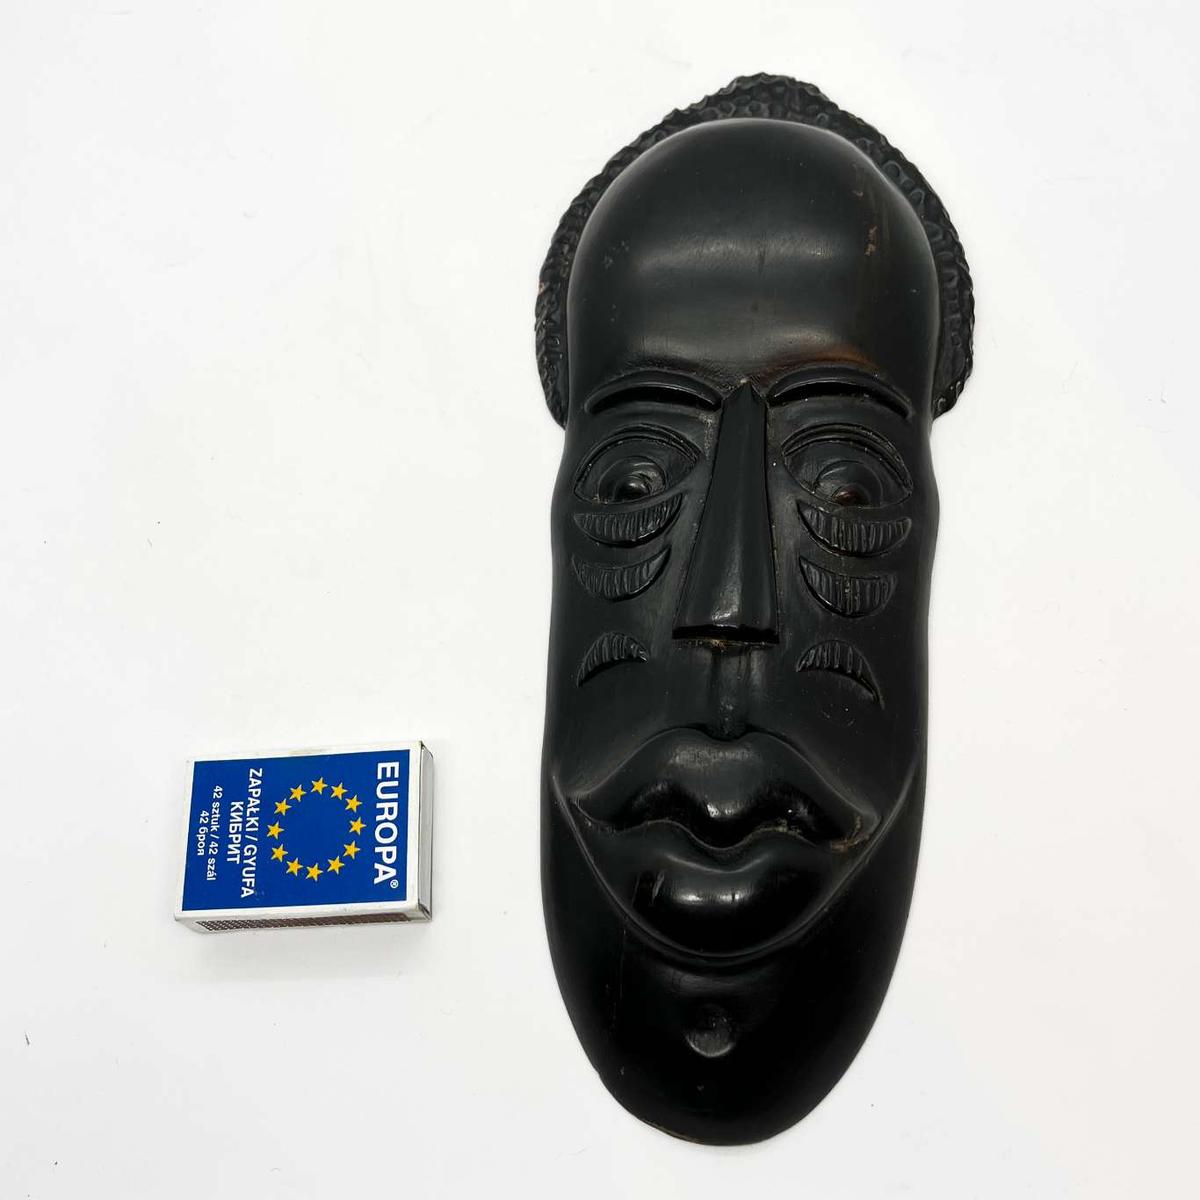 Drewniana dekoracyjna maska, Kuba lata 70.